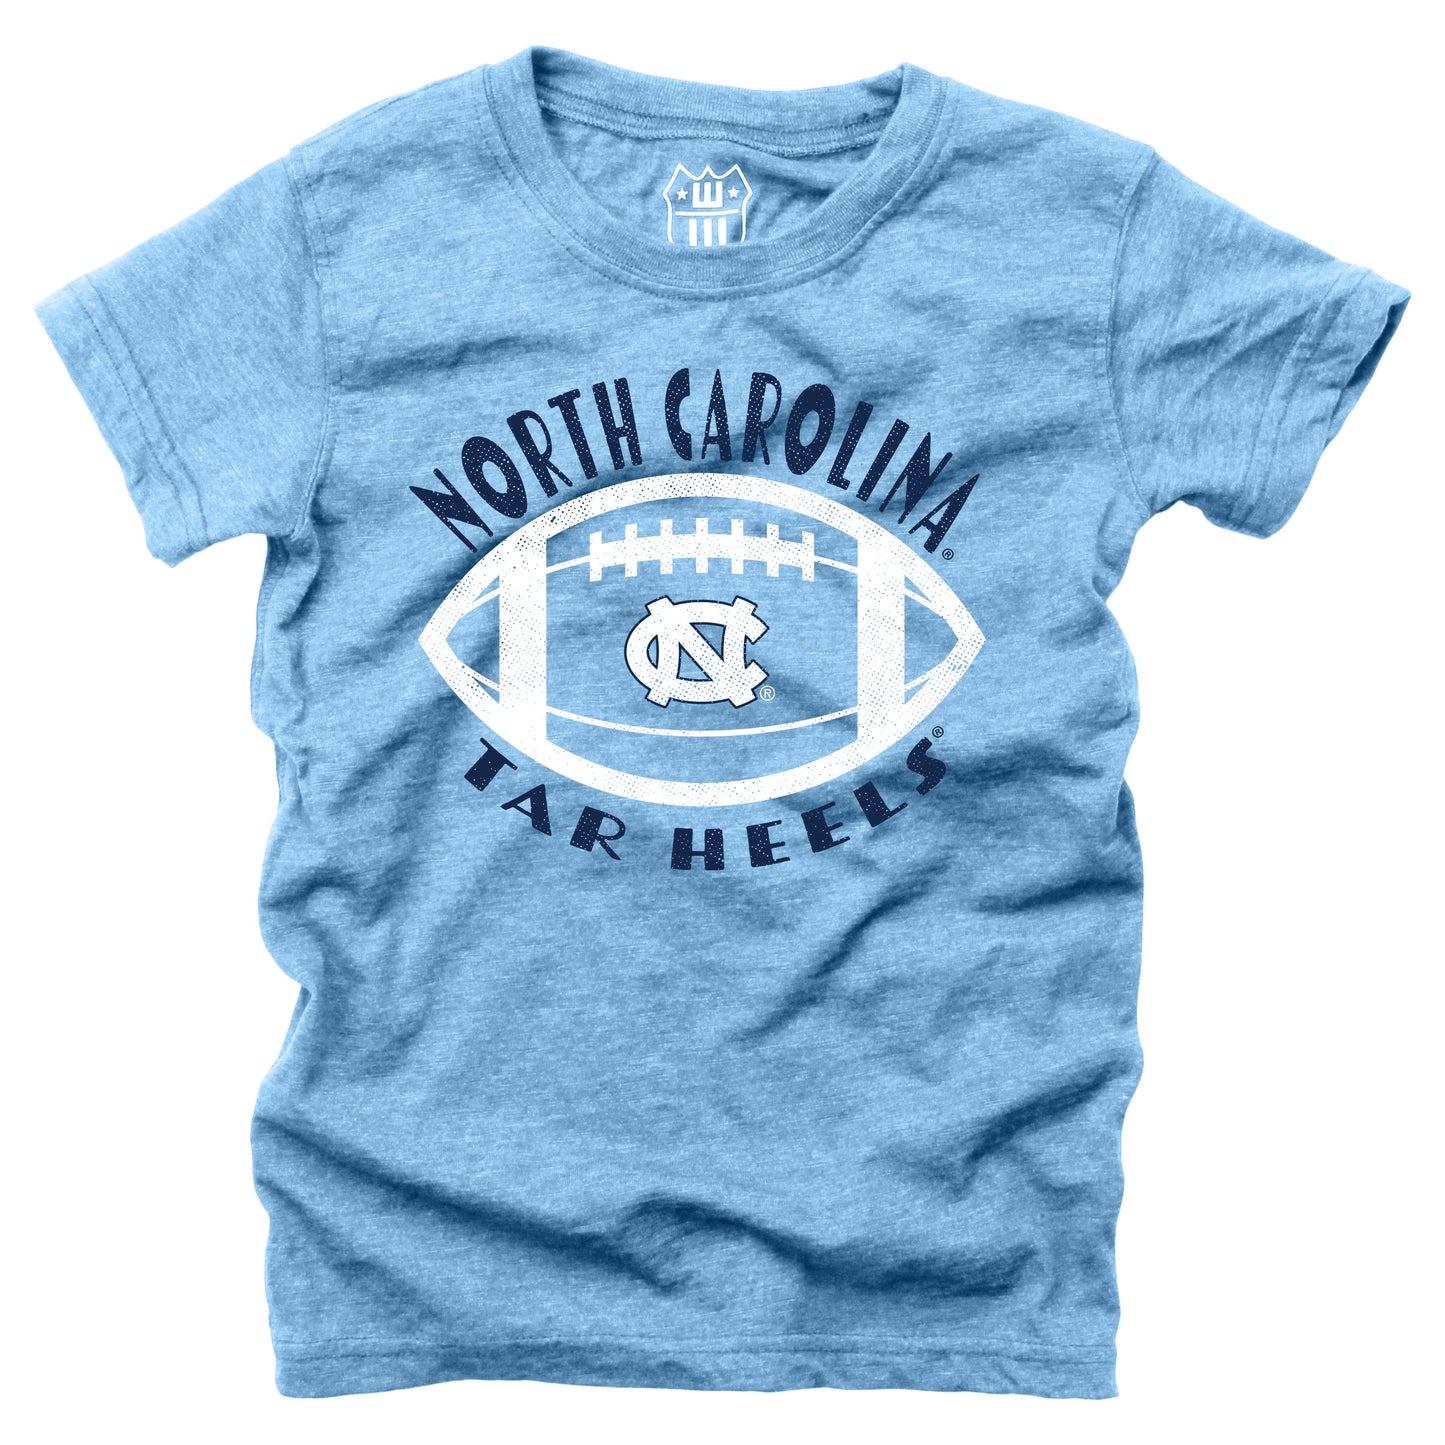 North Carolina Tar Heels Kid's Football T-Shirt by Wes and Willy